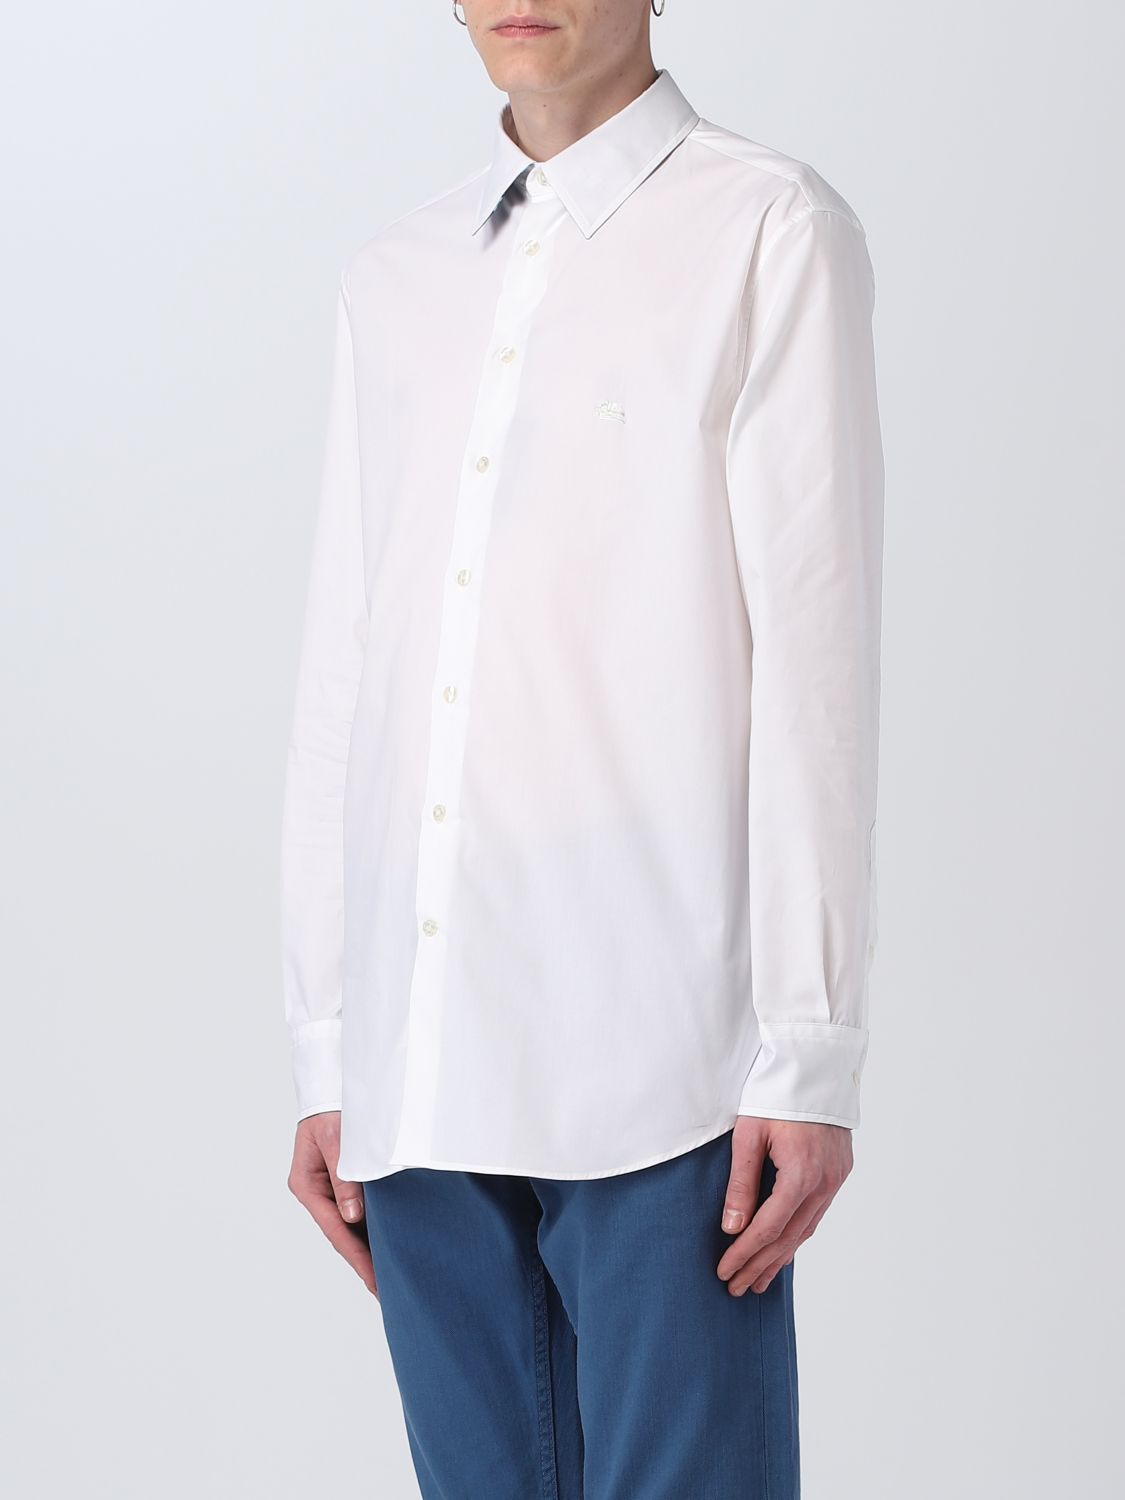 ETRO: shirt for man - White | Etro shirt 1K5268782 online on GIGLIO.COM